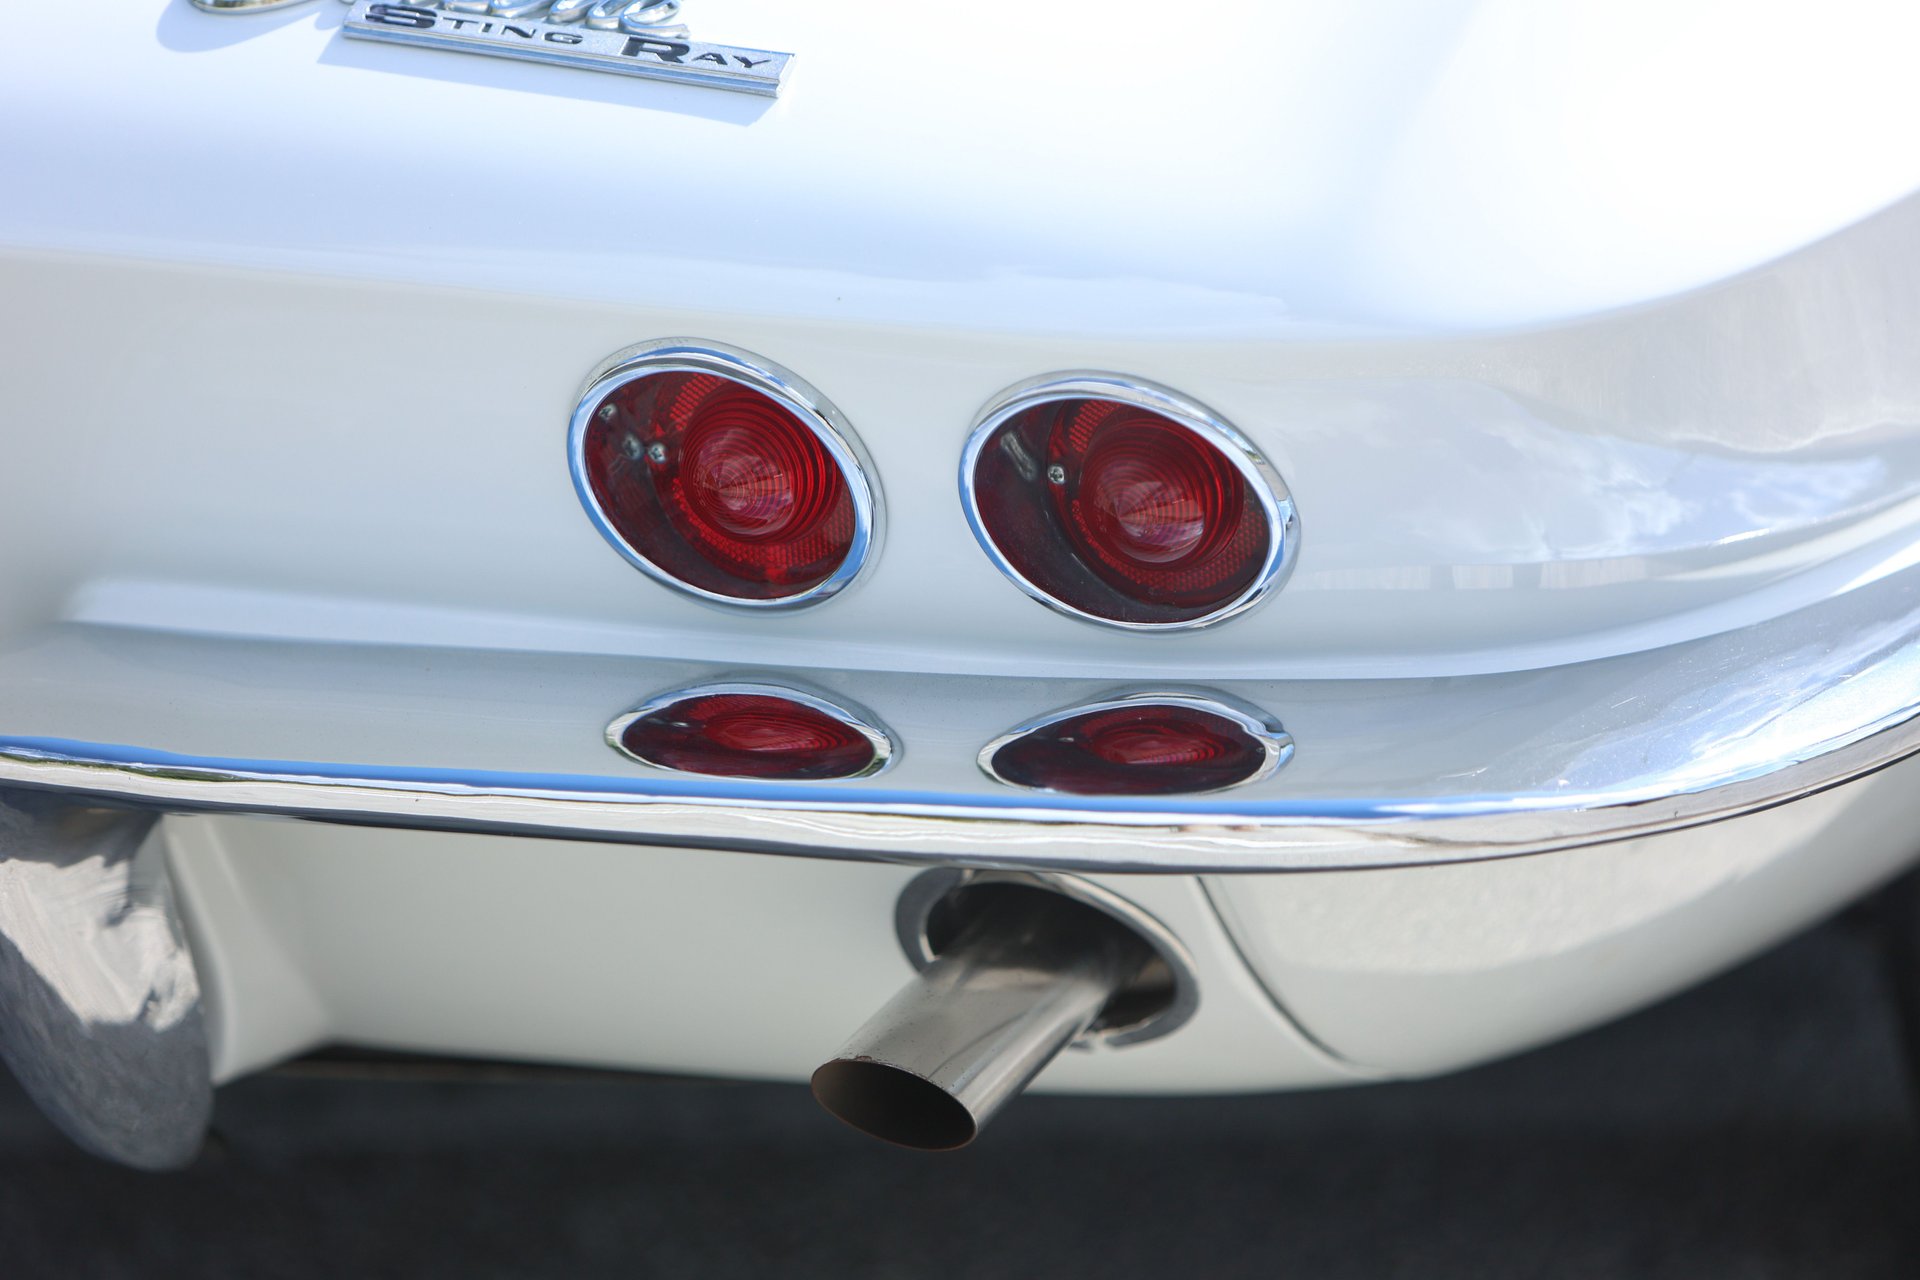 1963 chevrolet corvette sting ray split window coupe